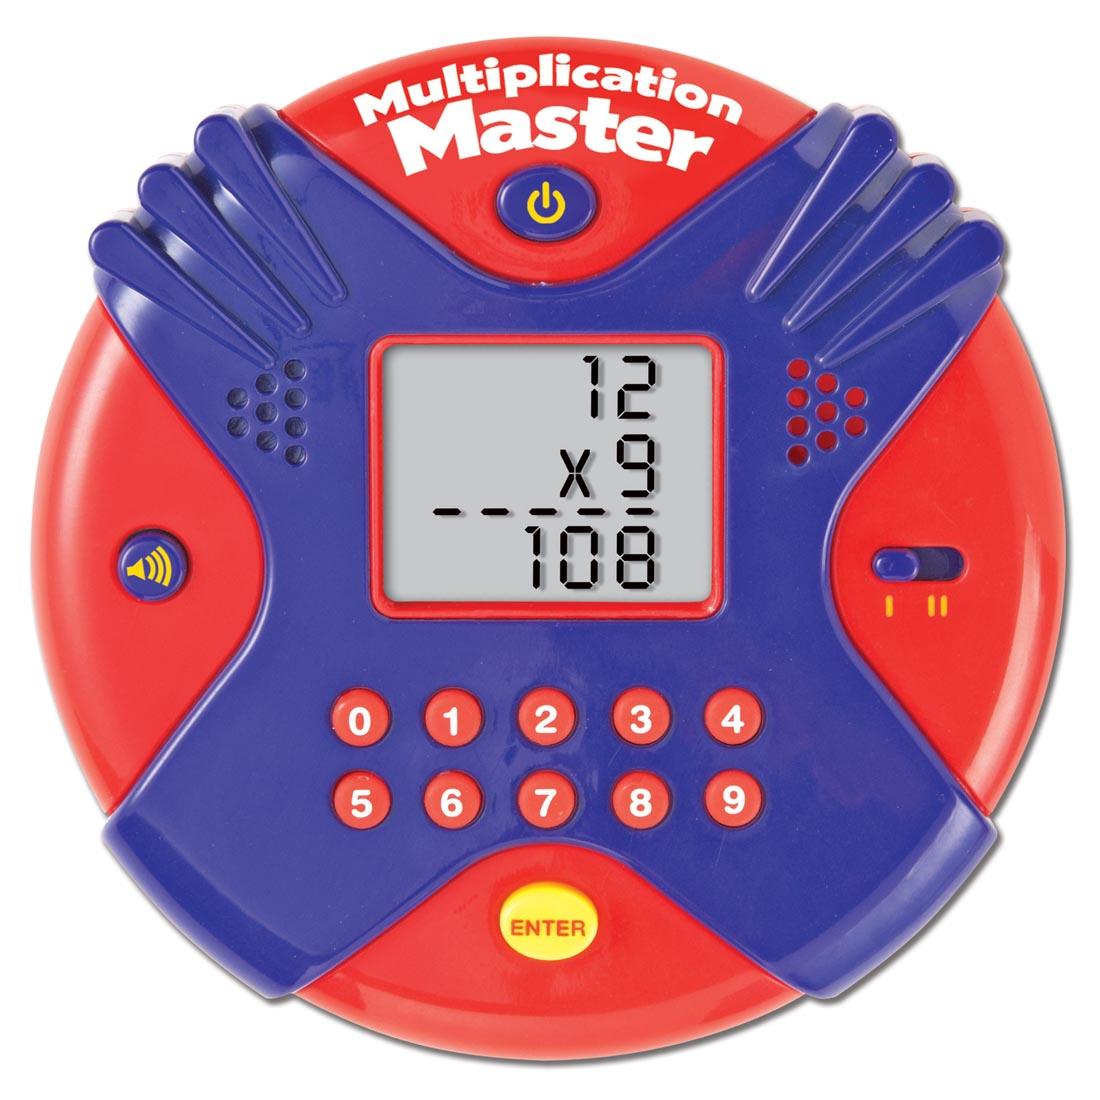 Multiplication Master Electronic Game